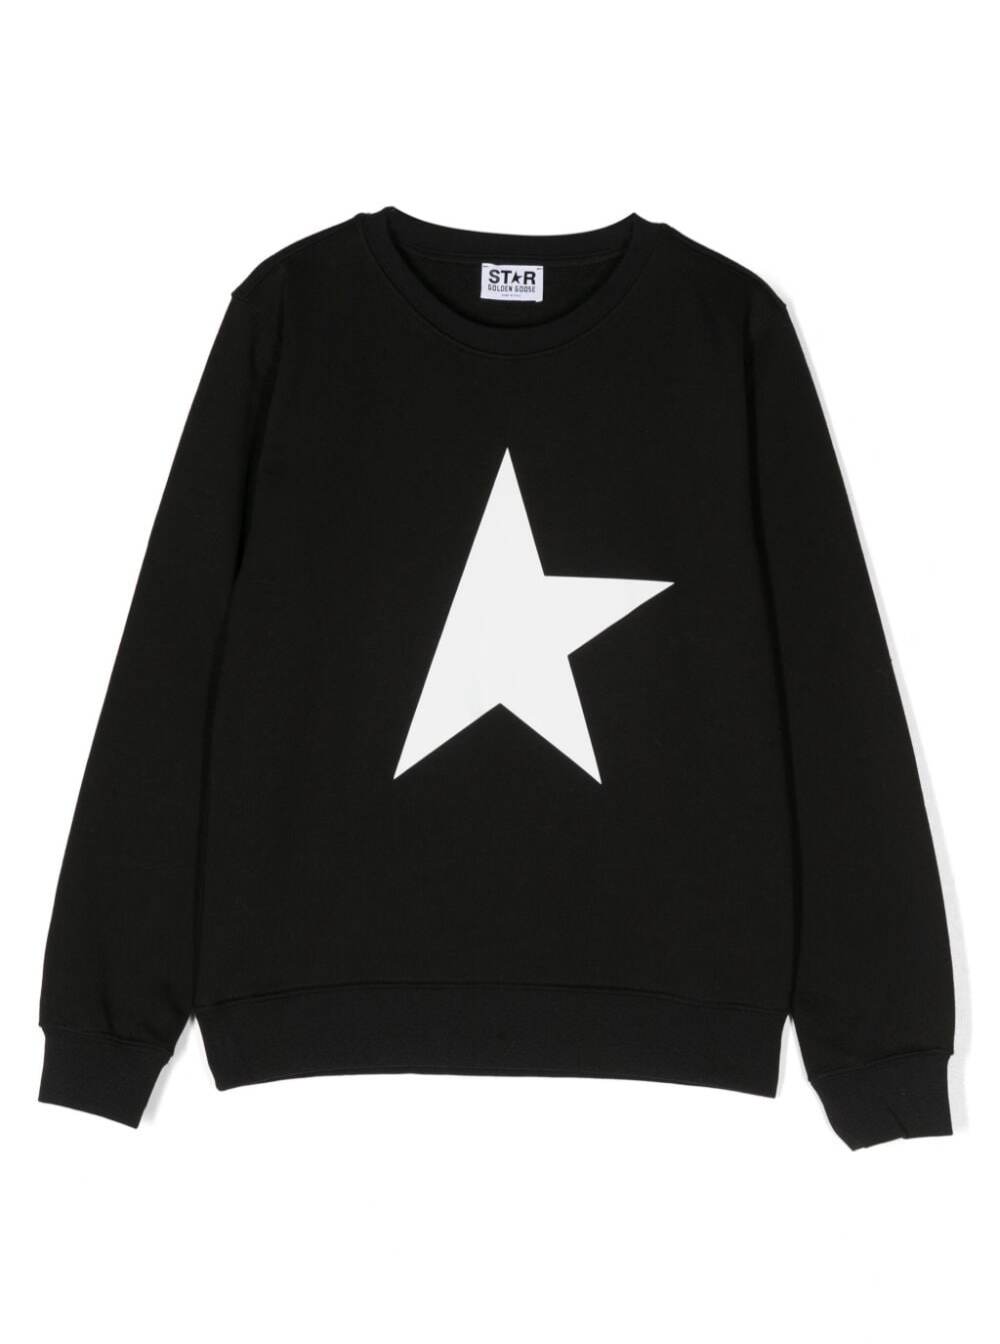 Shop Golden Goose Star Boys Crewneck Regular Sweatshirt / Big Star Printed Include Cod Gyp In Black